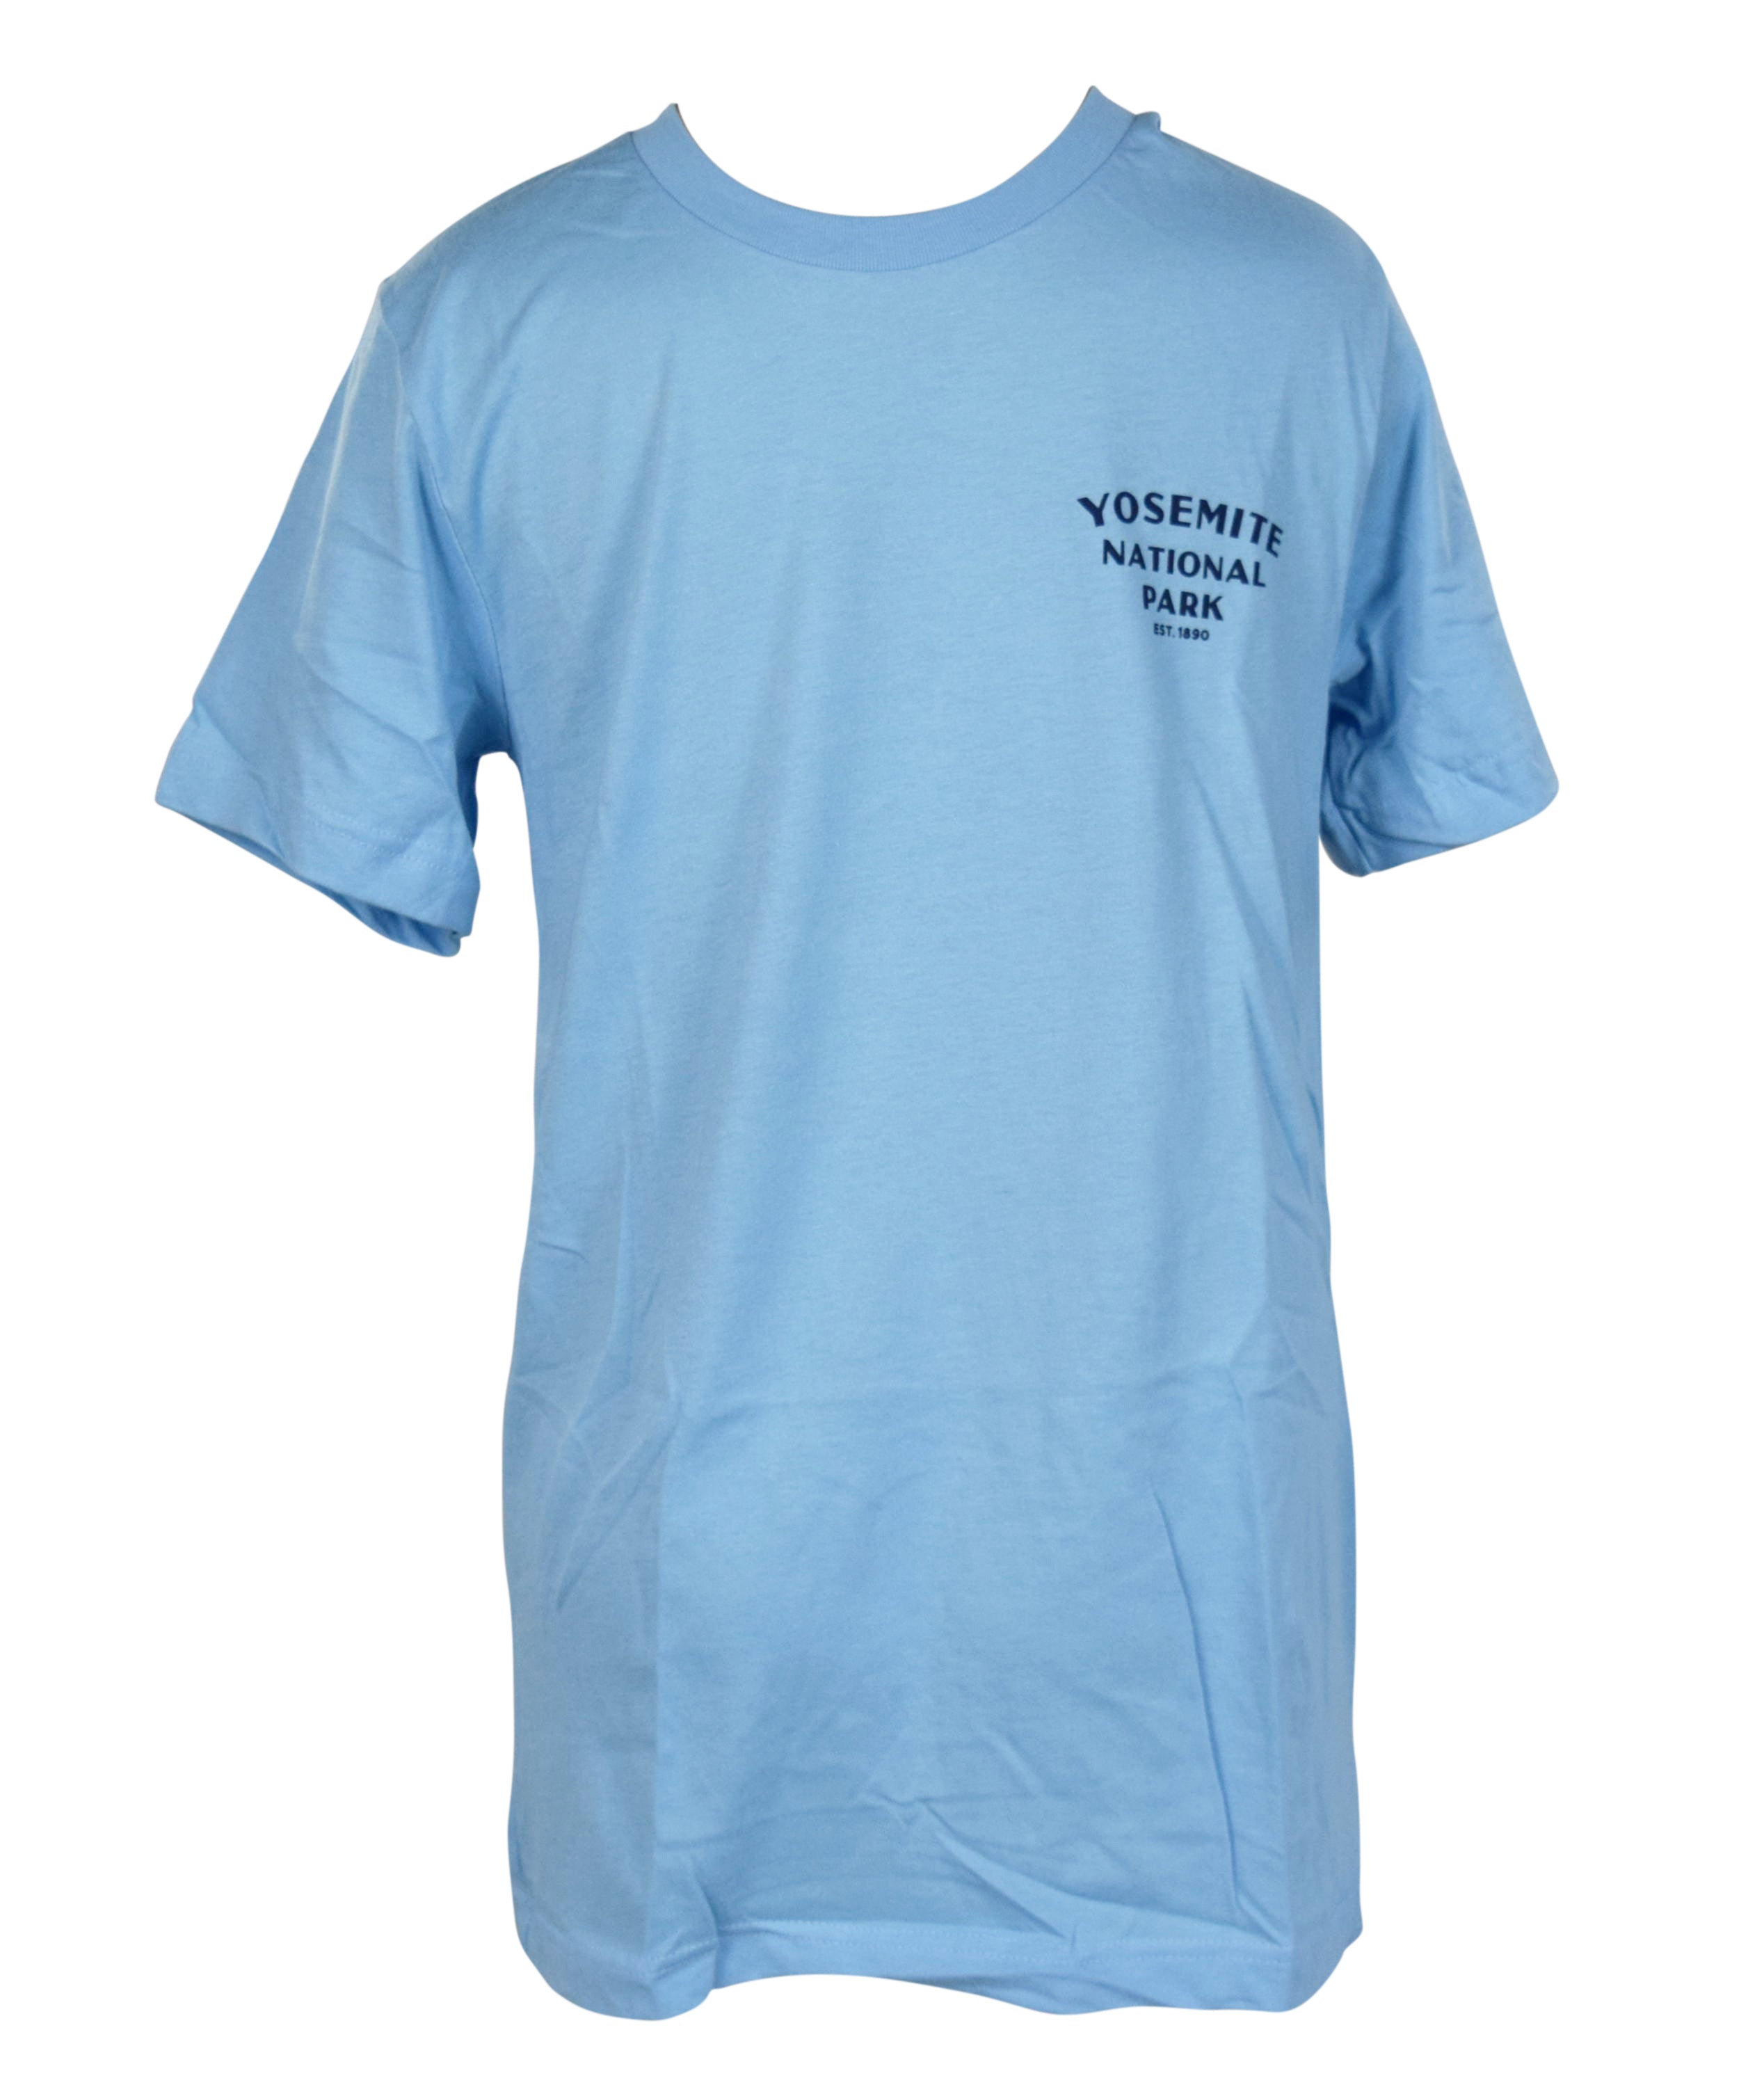 Sendero Provisions Co. Yosemite National Park "Ocean" T-Shirt (L)